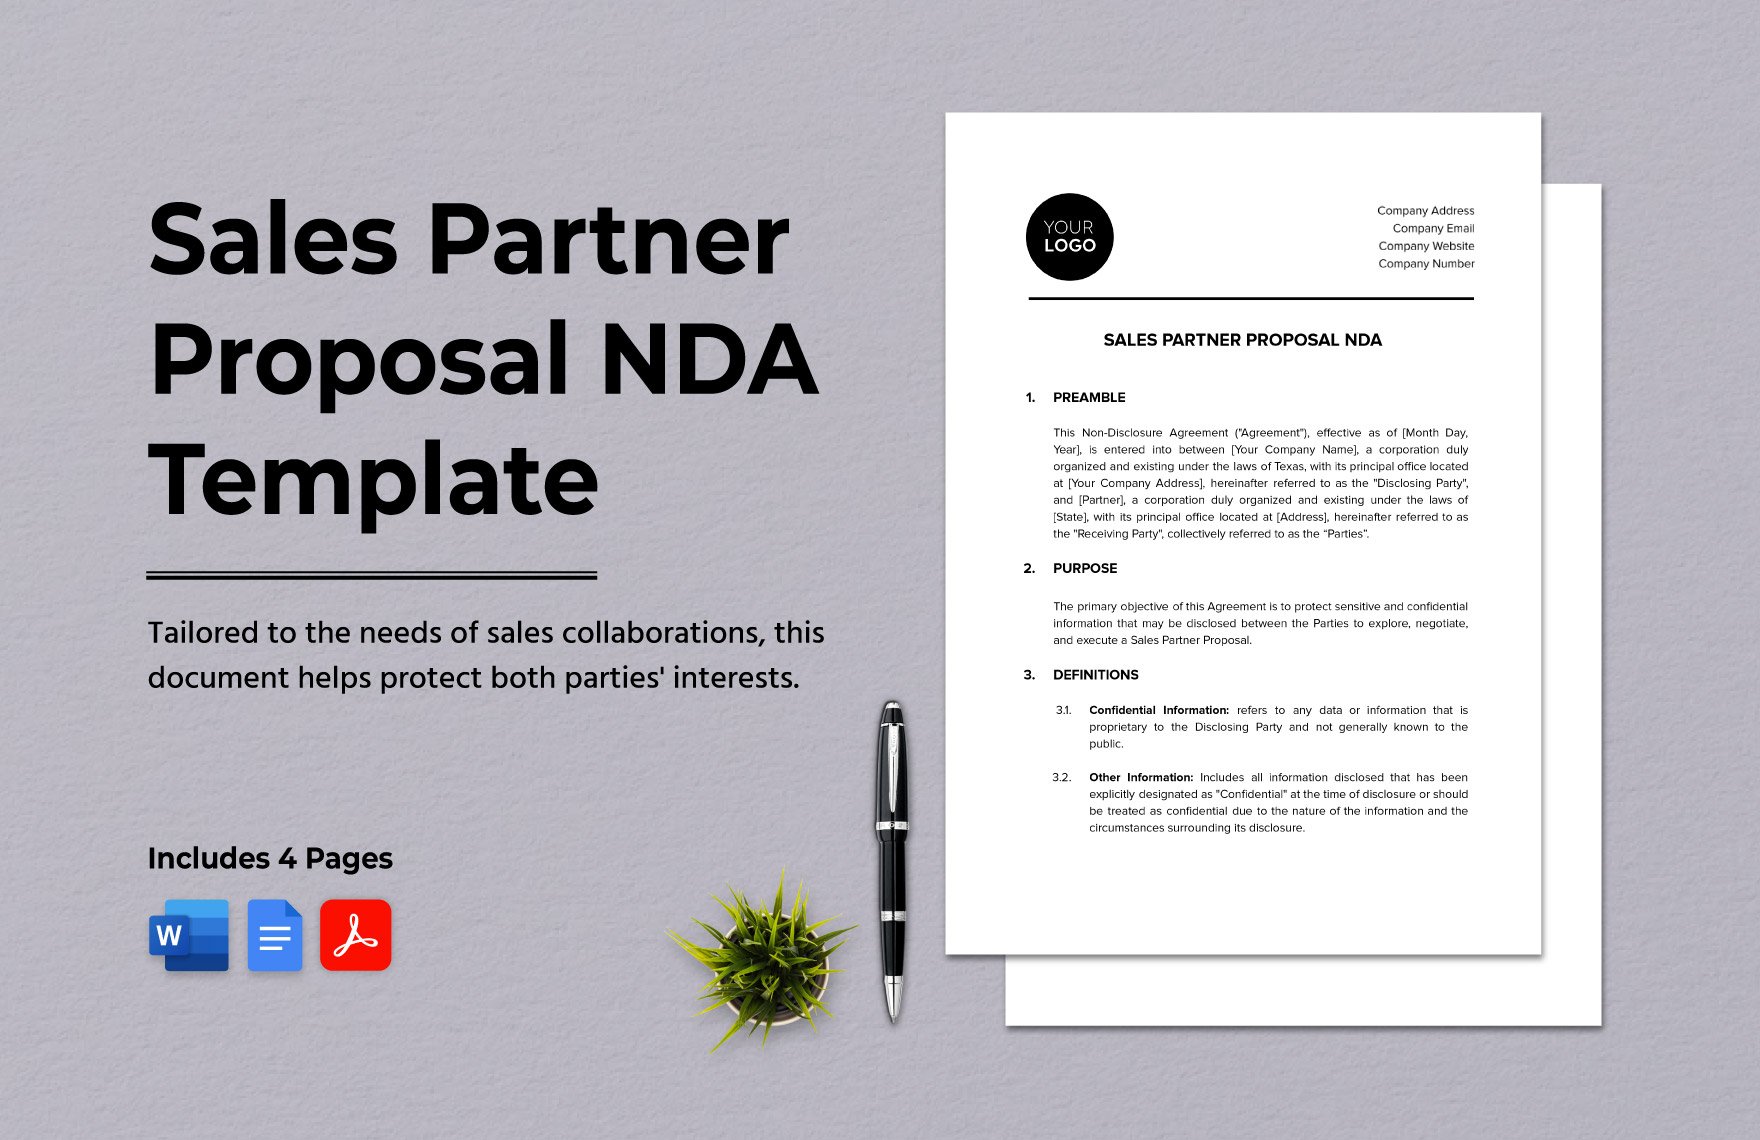 Sales Partner Proposal NDA Template in Word, Google Docs, PDF